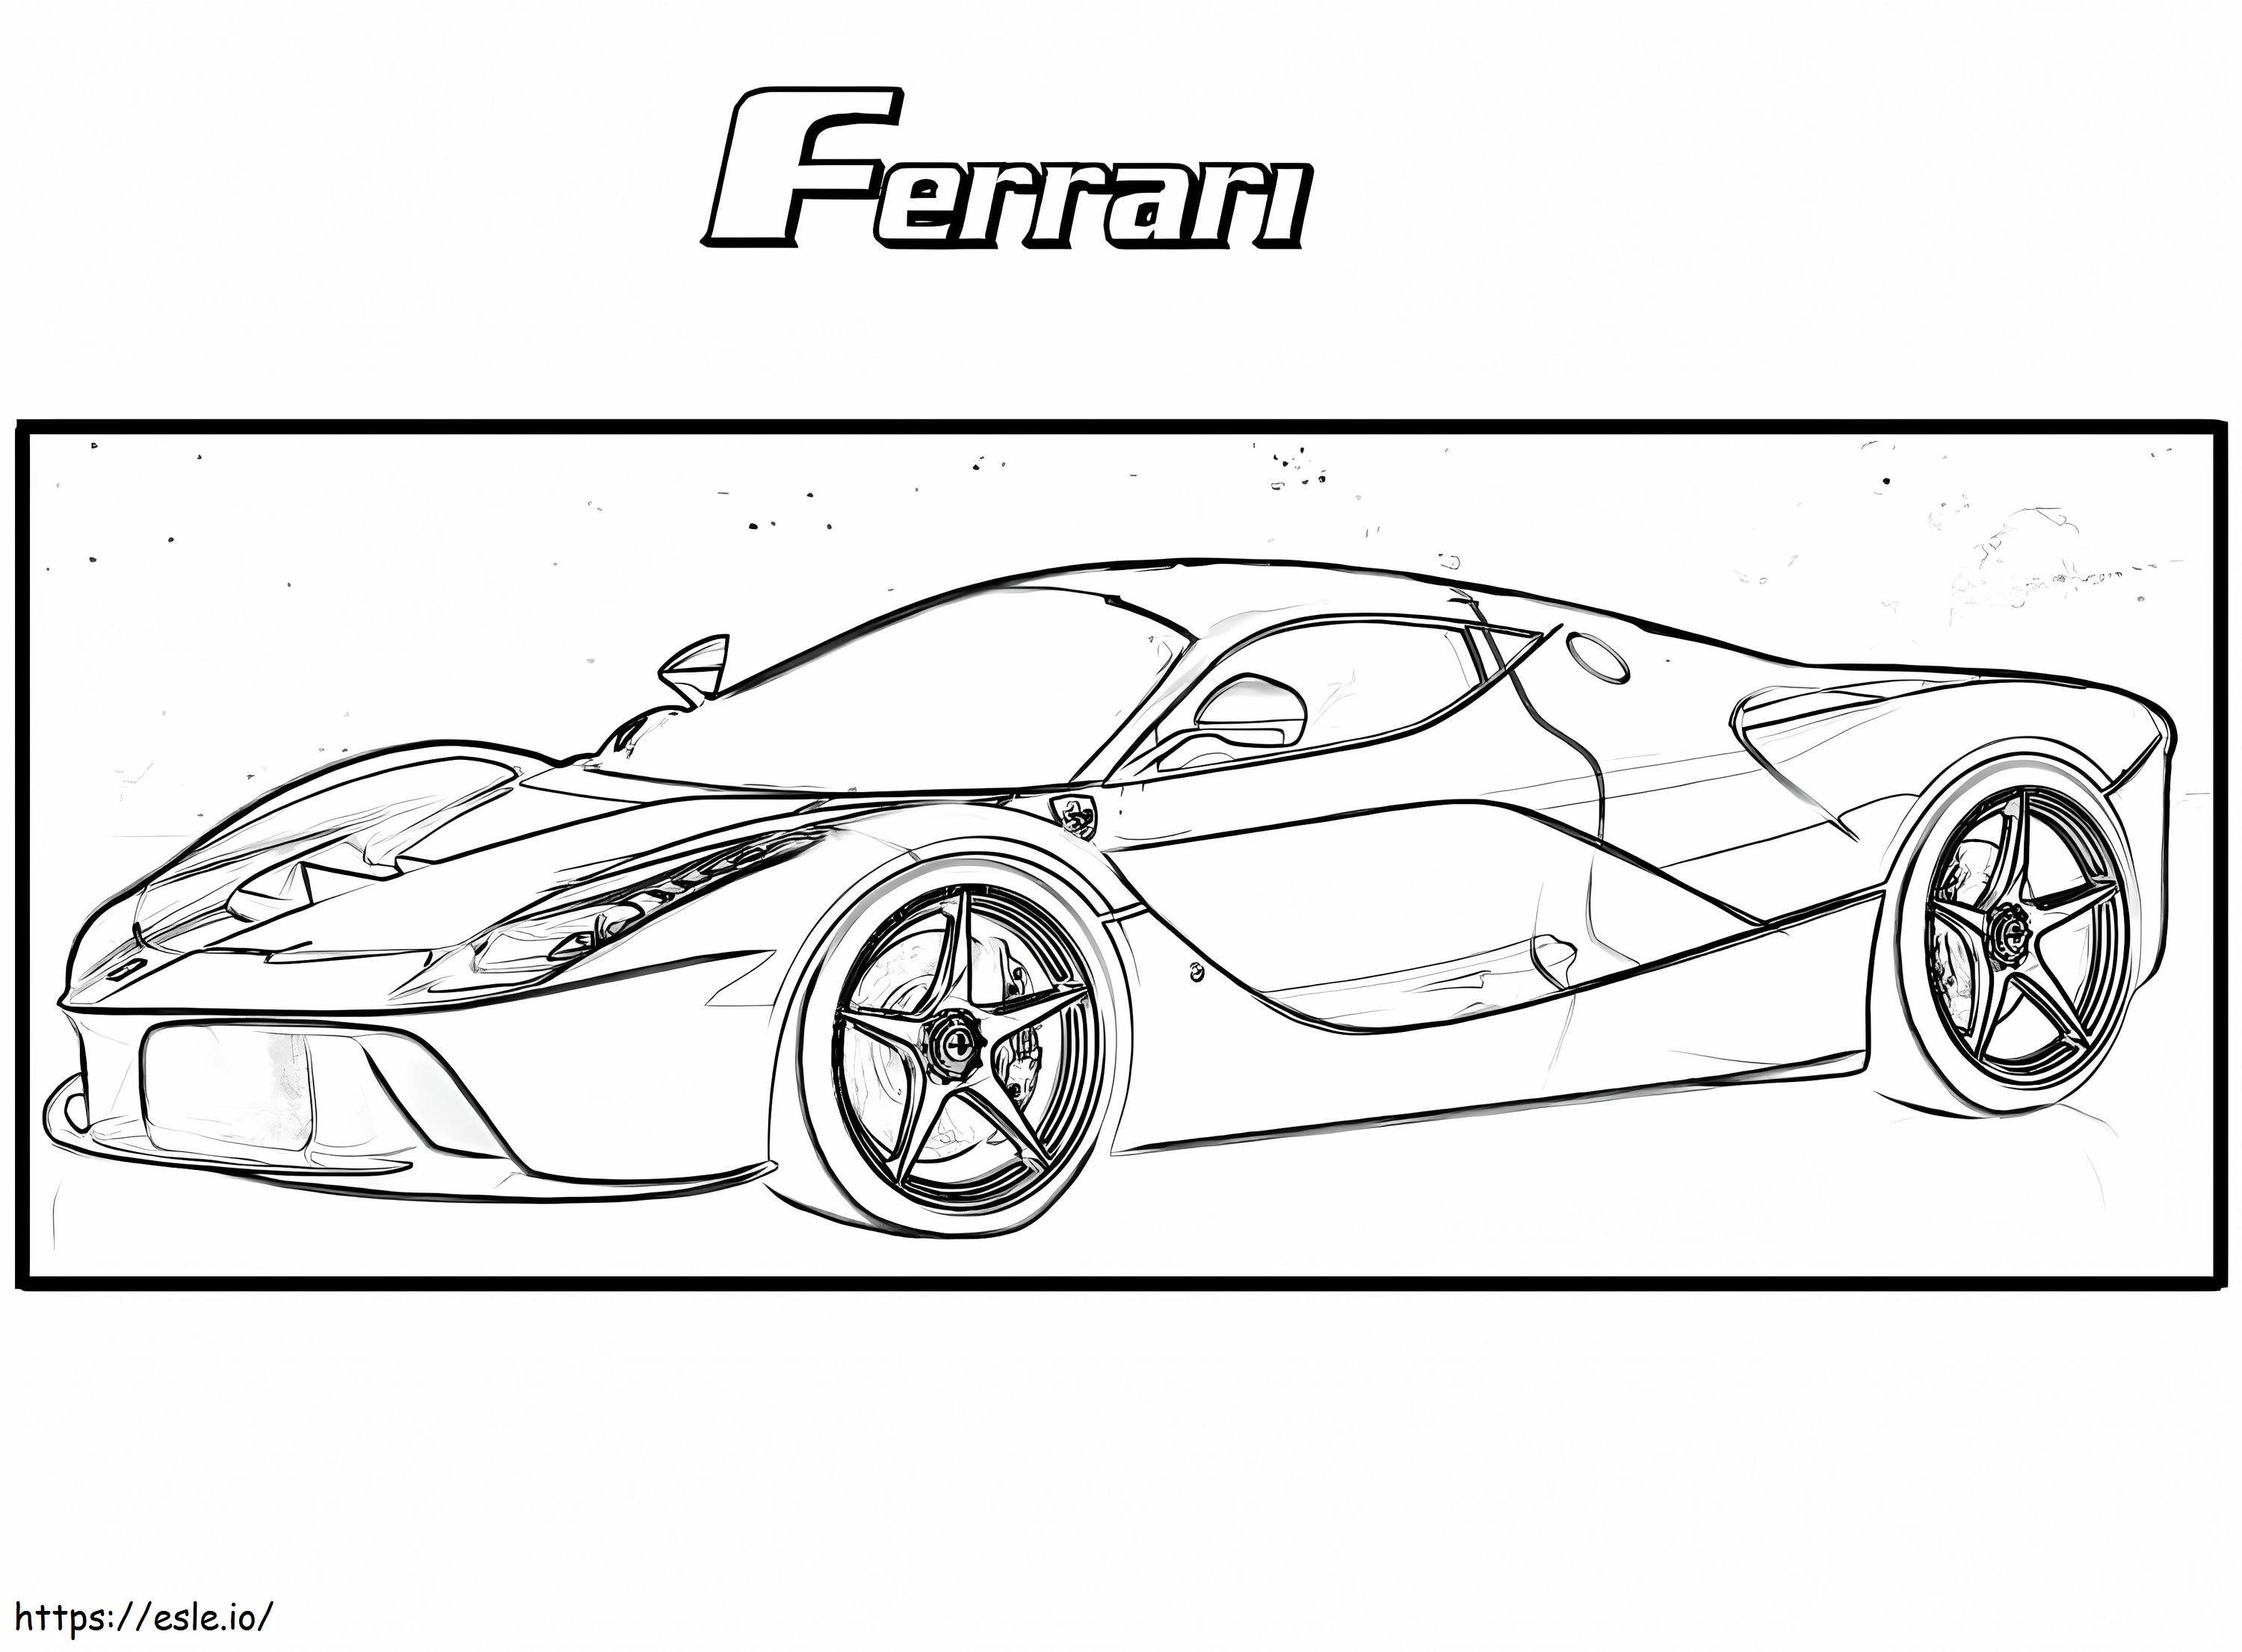 Ferrari-11 kleurplaat kleurplaat